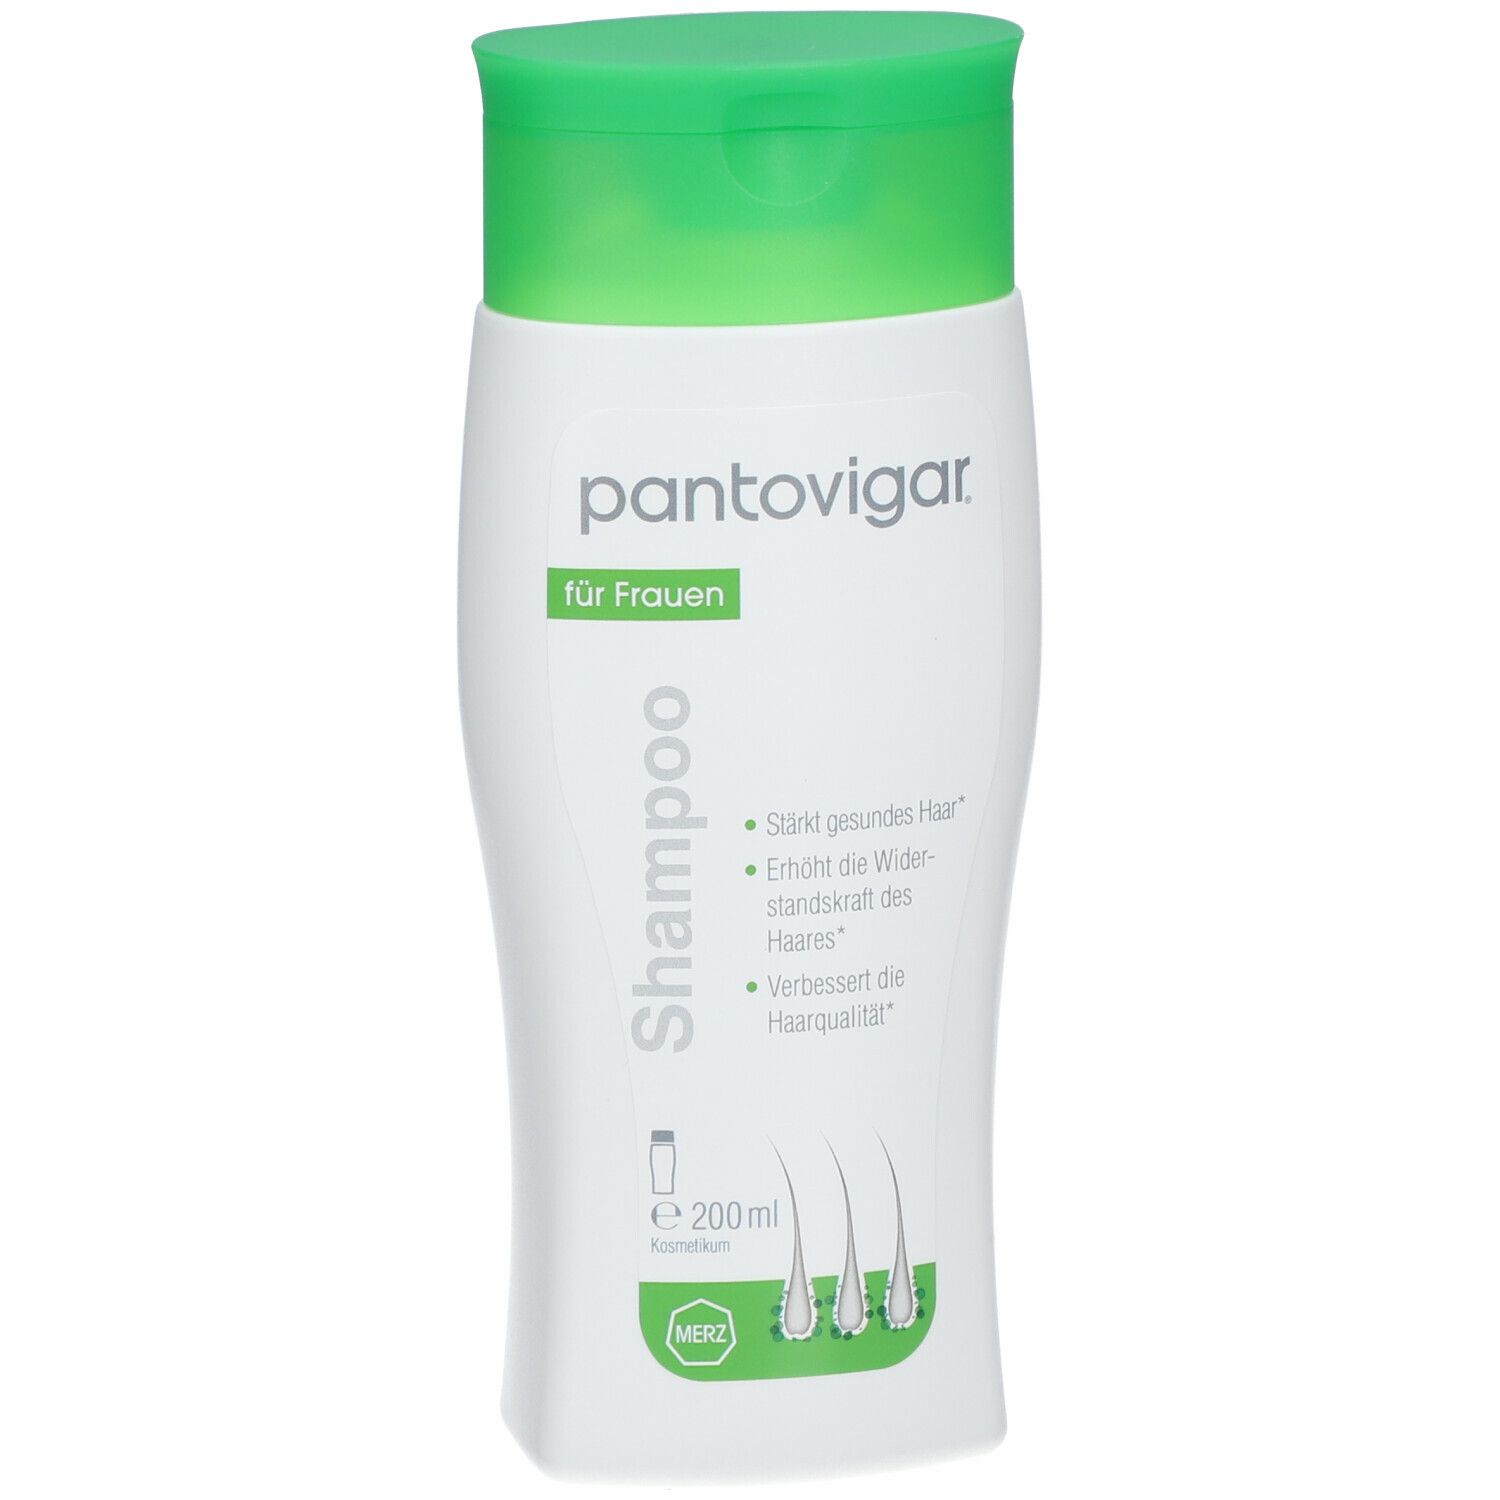 Pantovigar® Shampoo